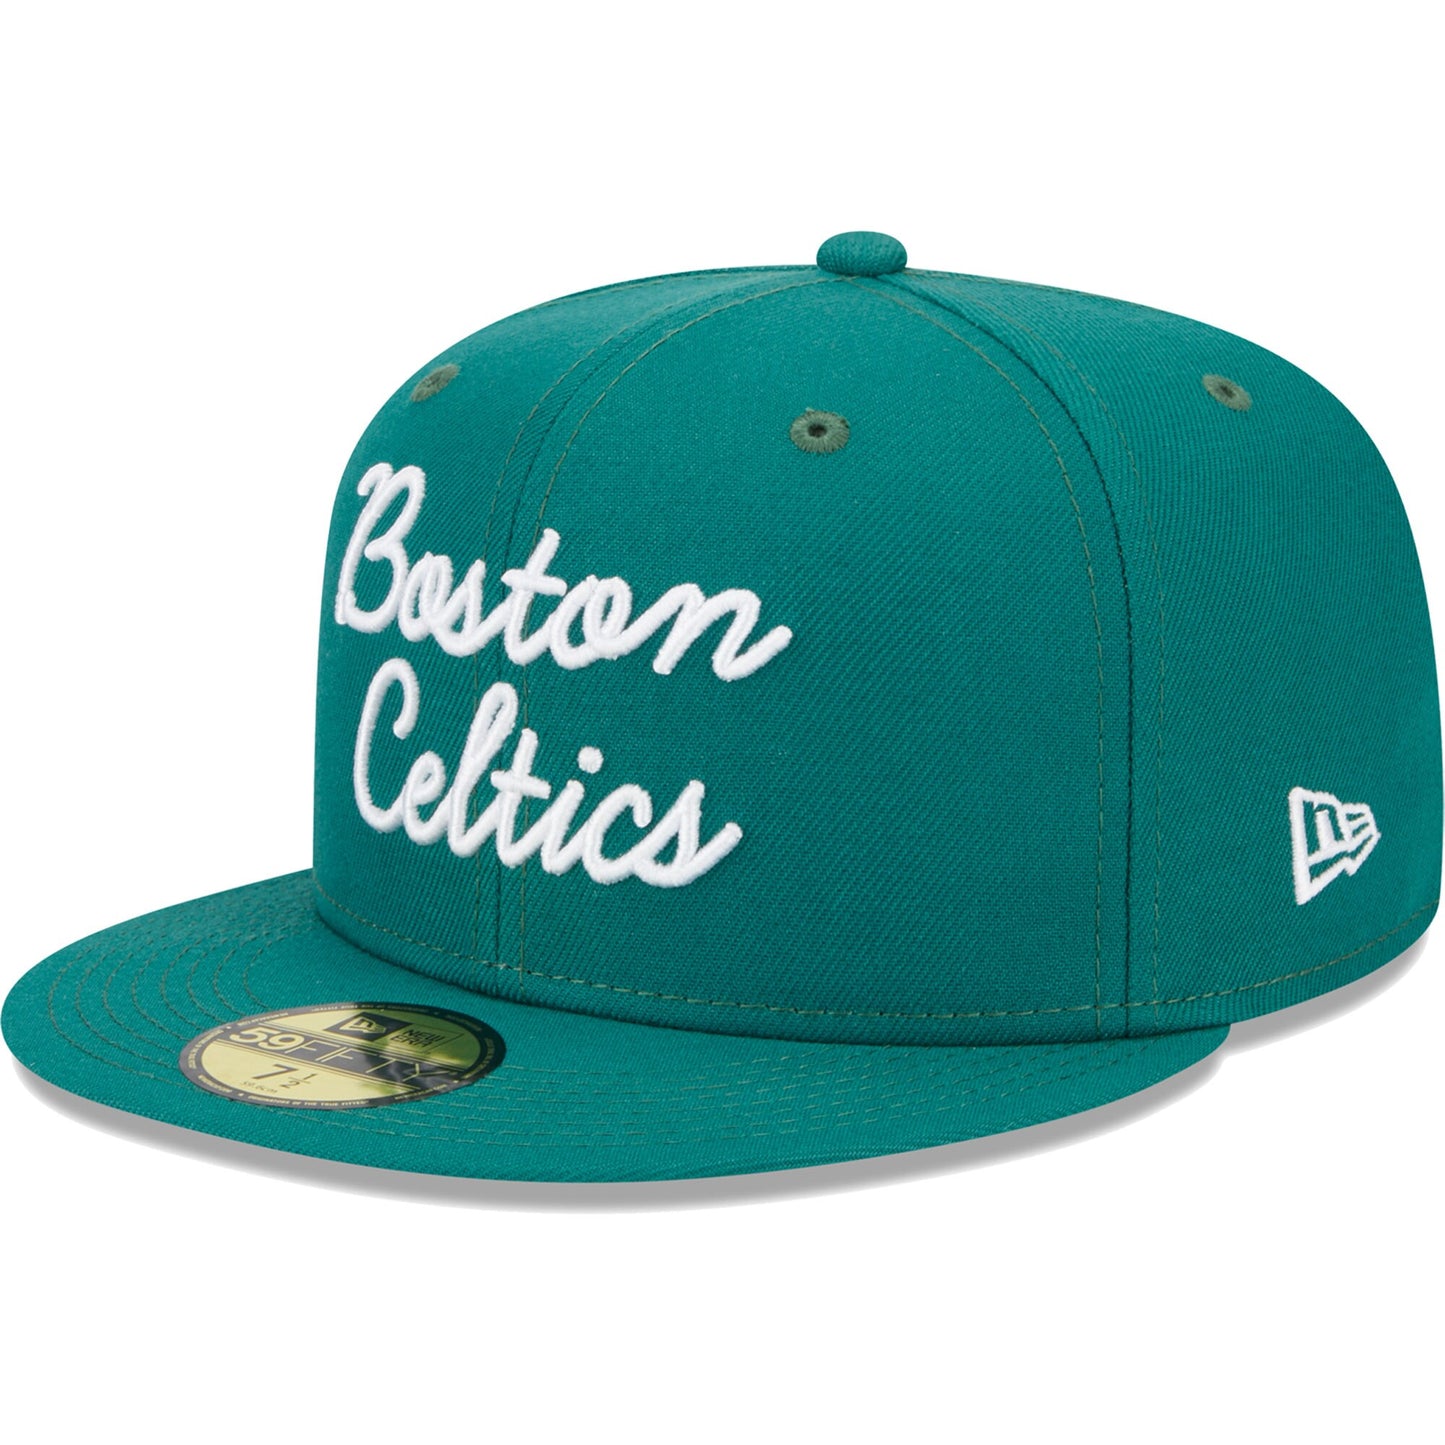 Boston Celtics New Era Script 59FIFTY Fitted Hat - Augusta Green